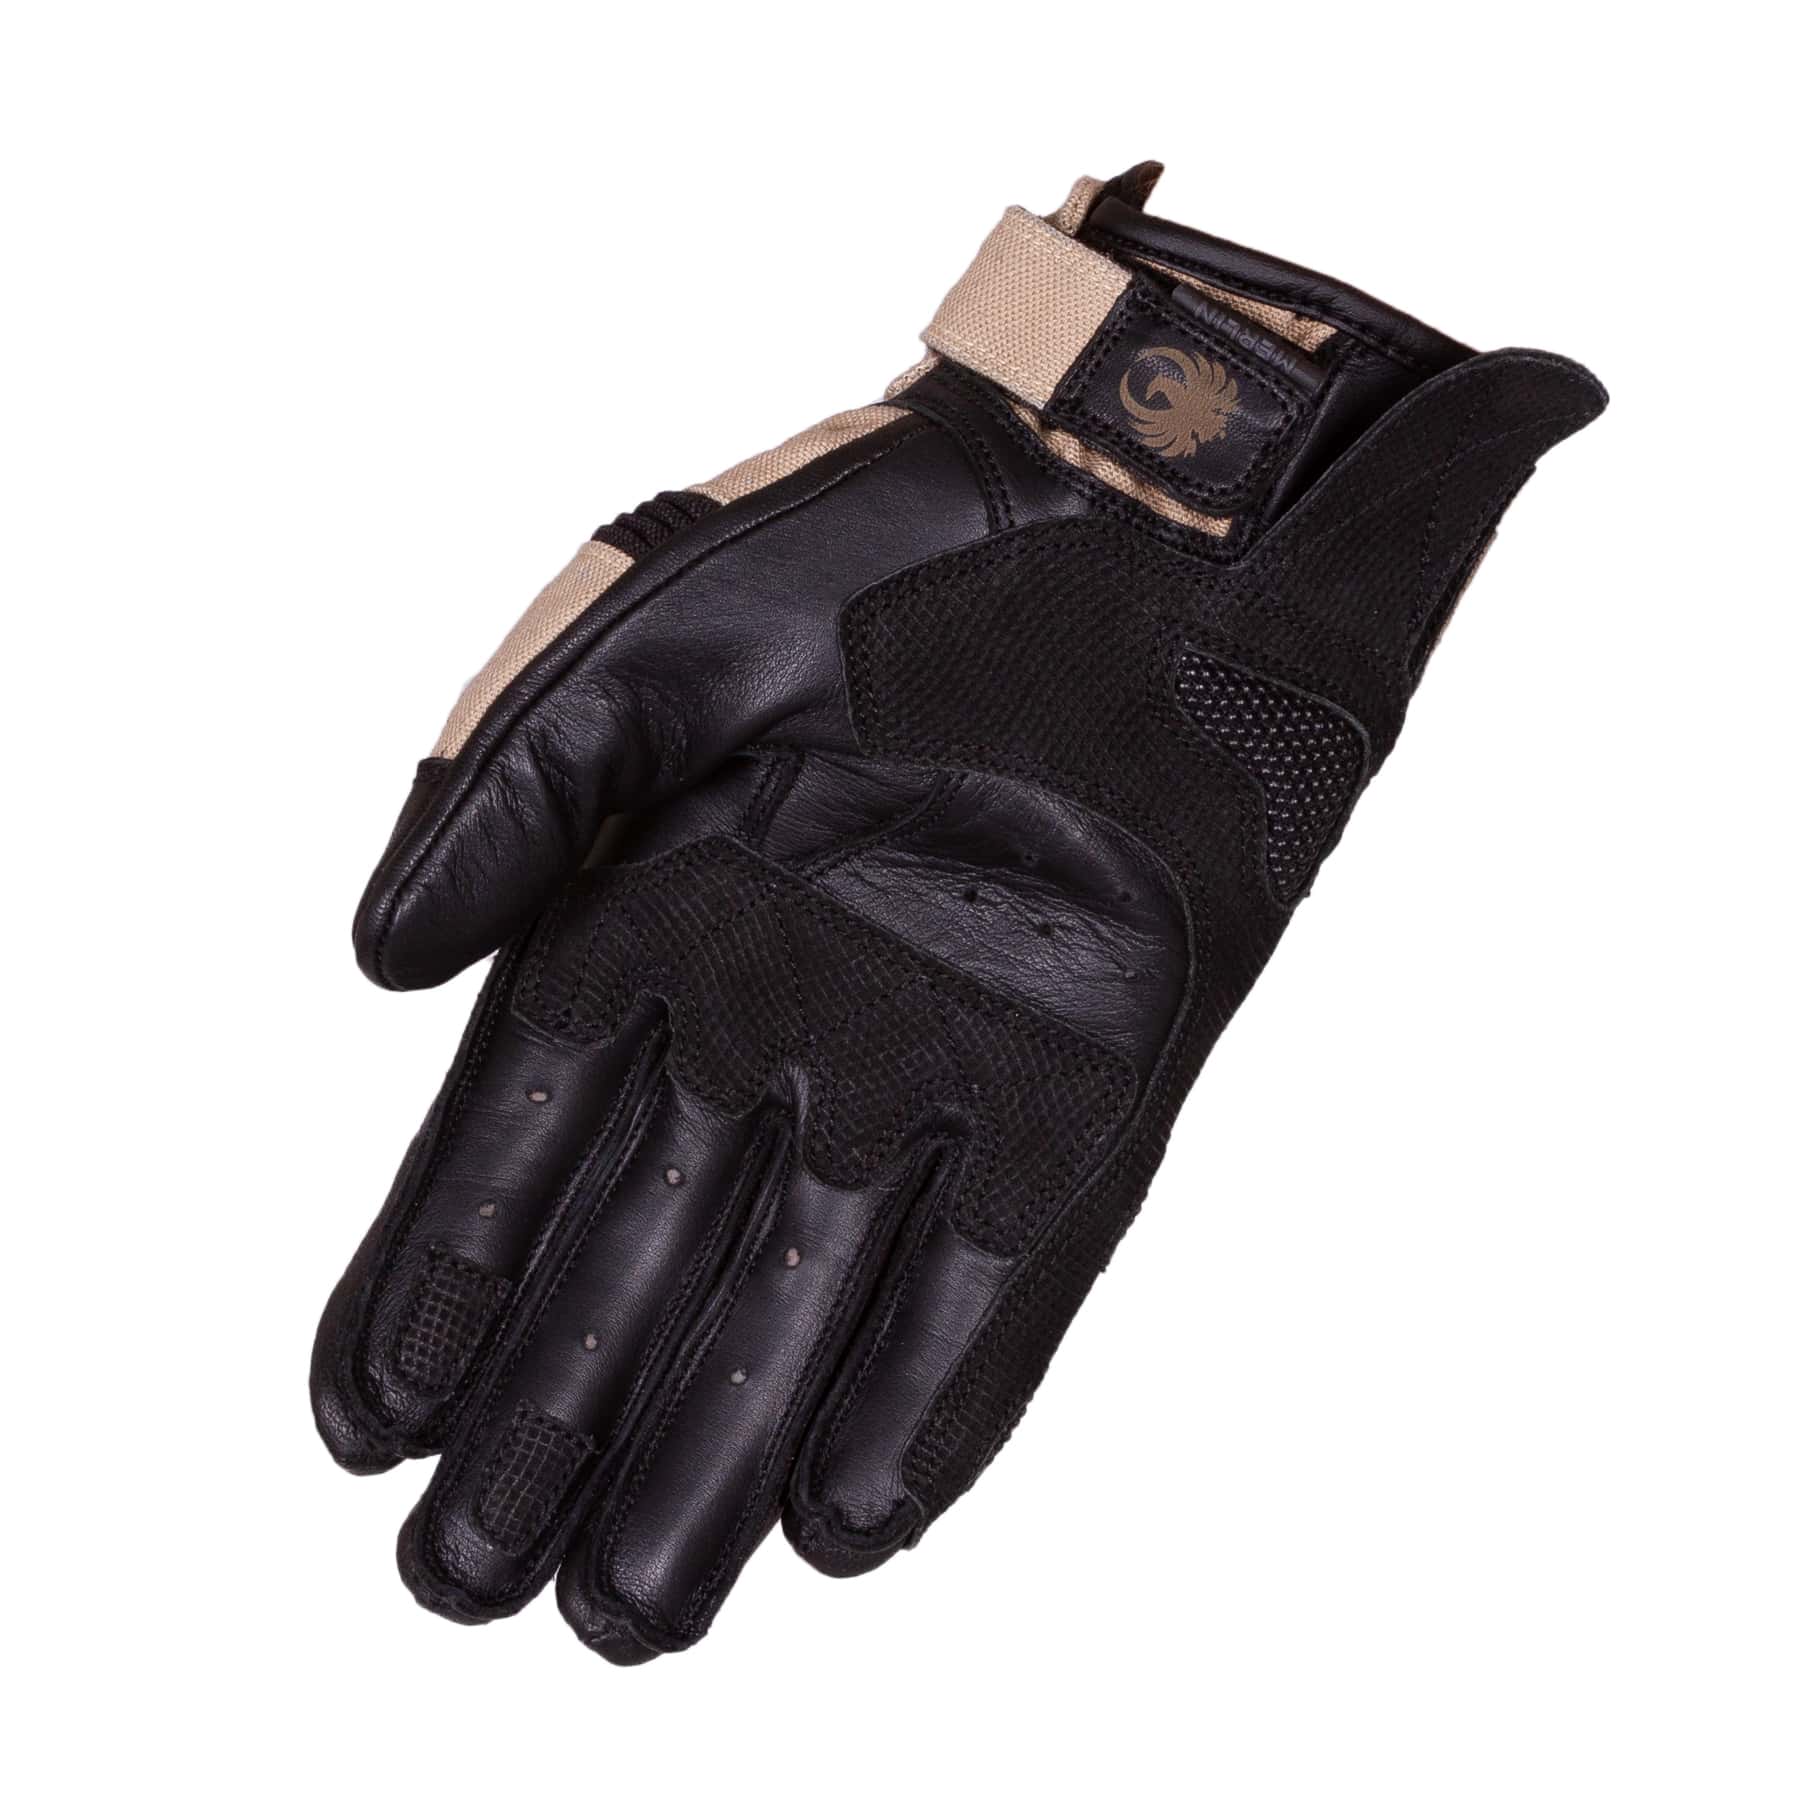 Merlin Mahala Raid glove in black/sand